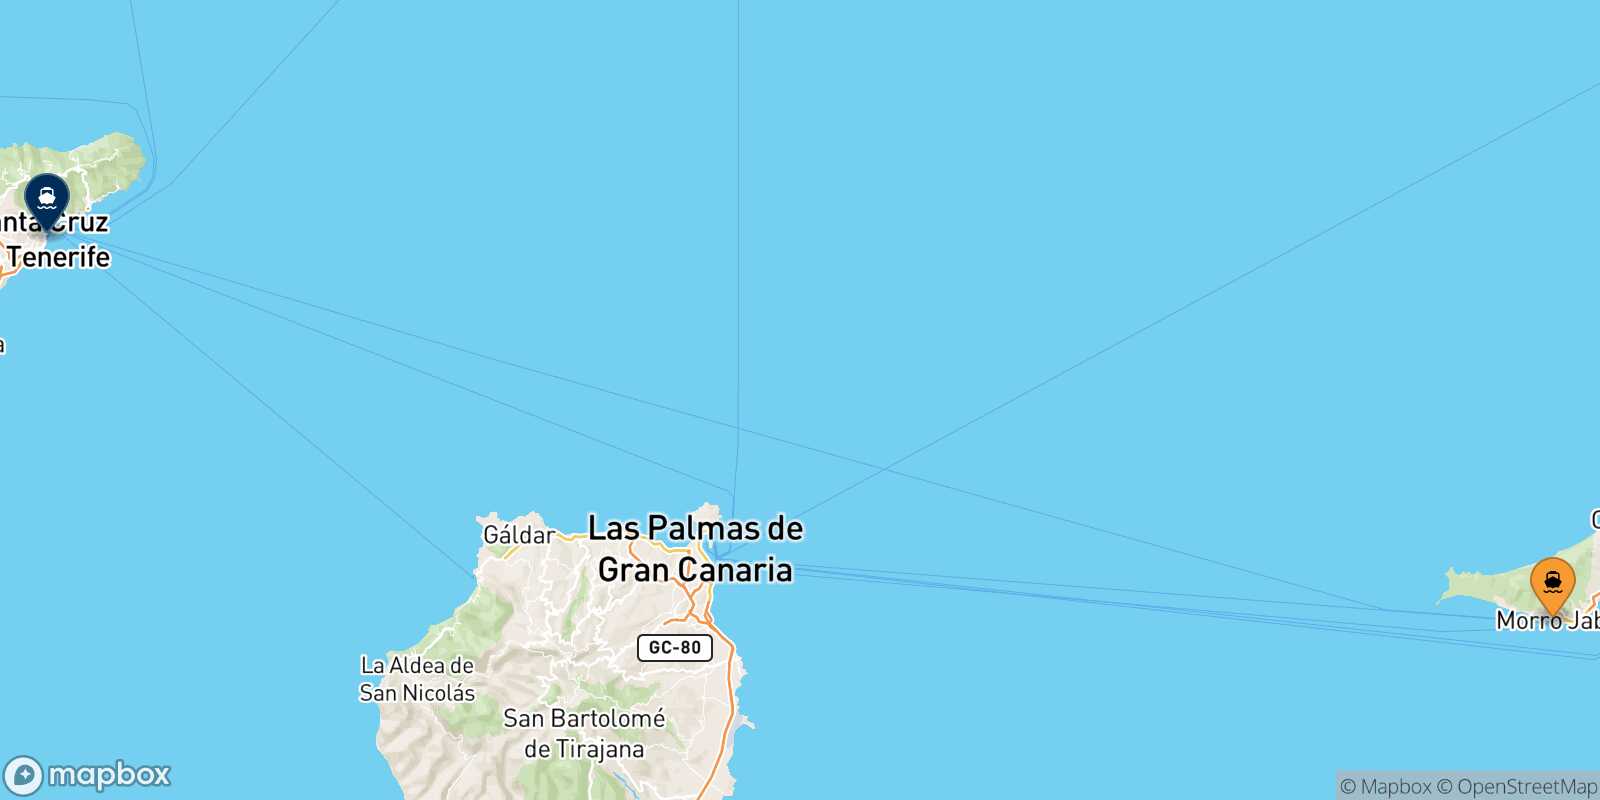 Morro Jable (Fuerteventura) Santa Cruz De Tenerife route map